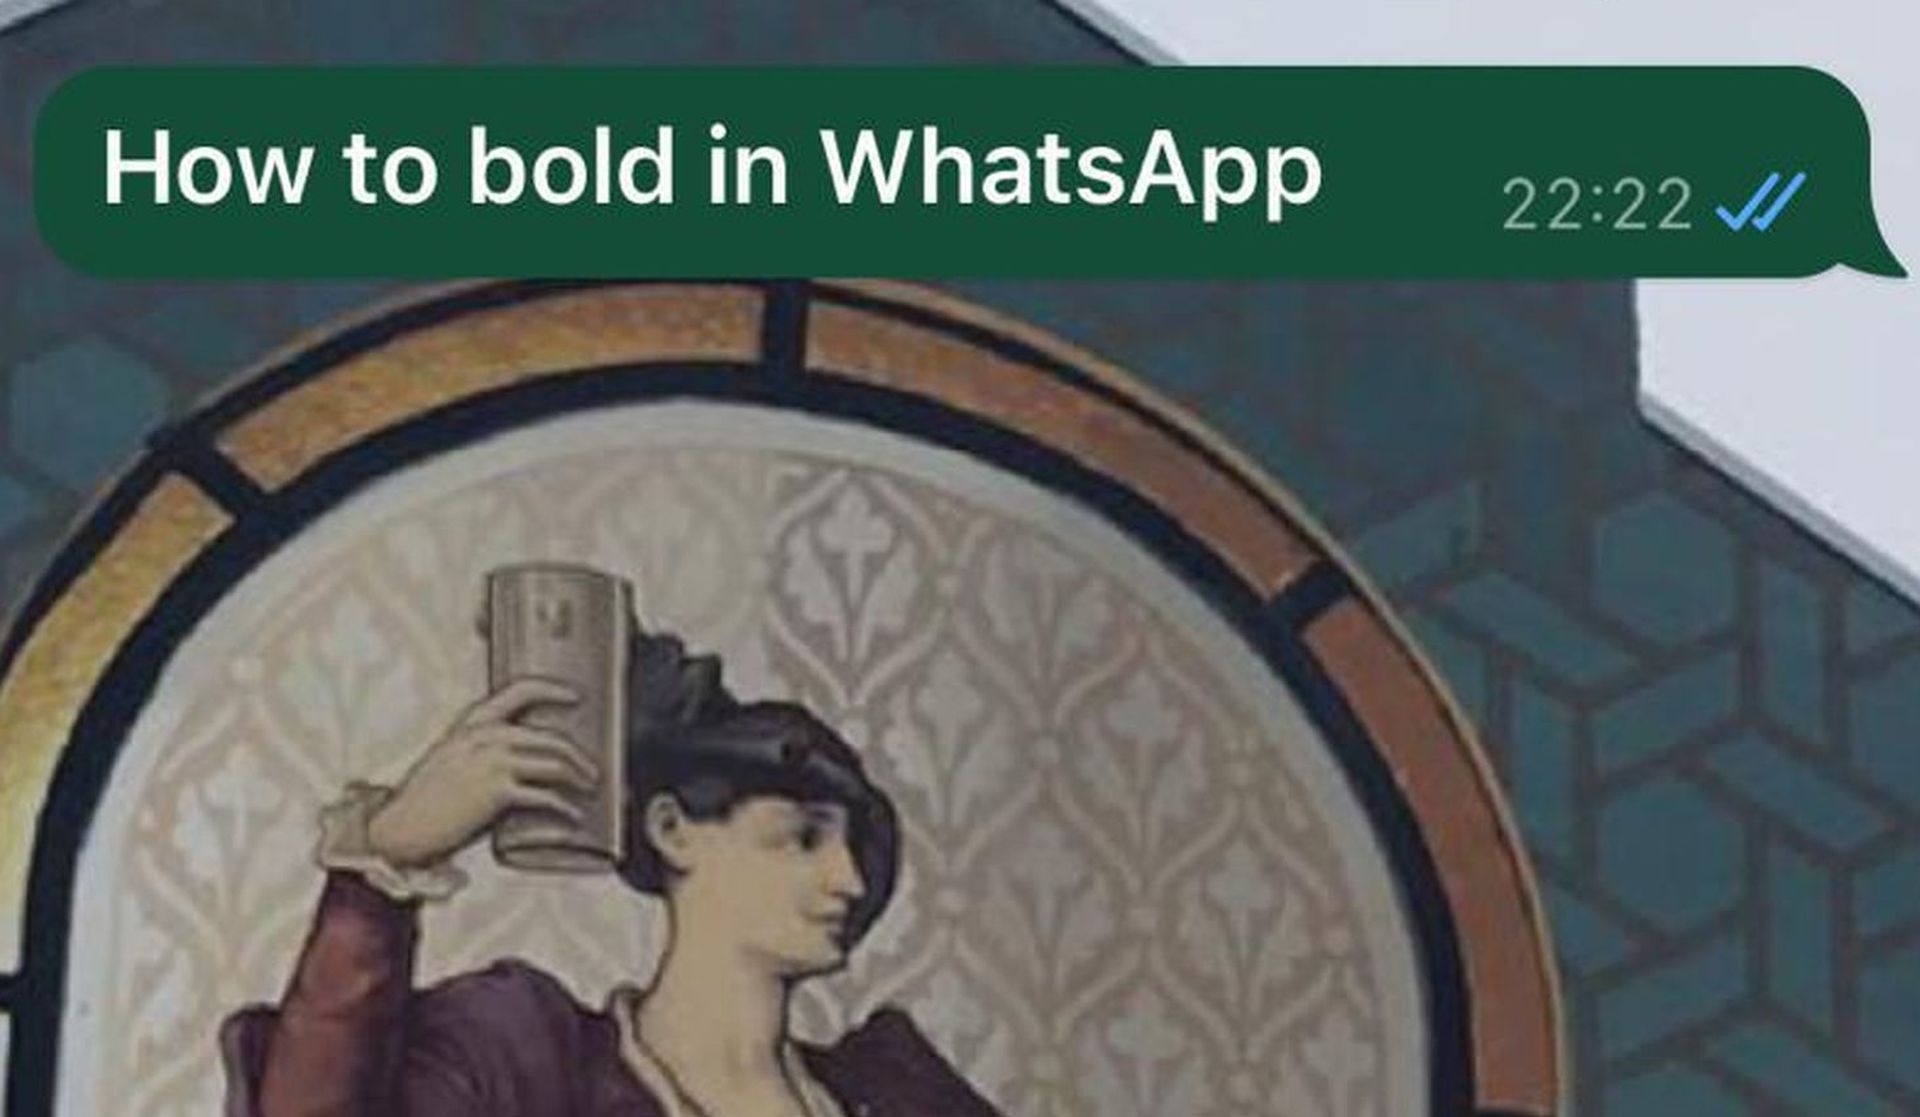 Como colocar negrito no Whatsapp: maneiras fáceis de formatar texto